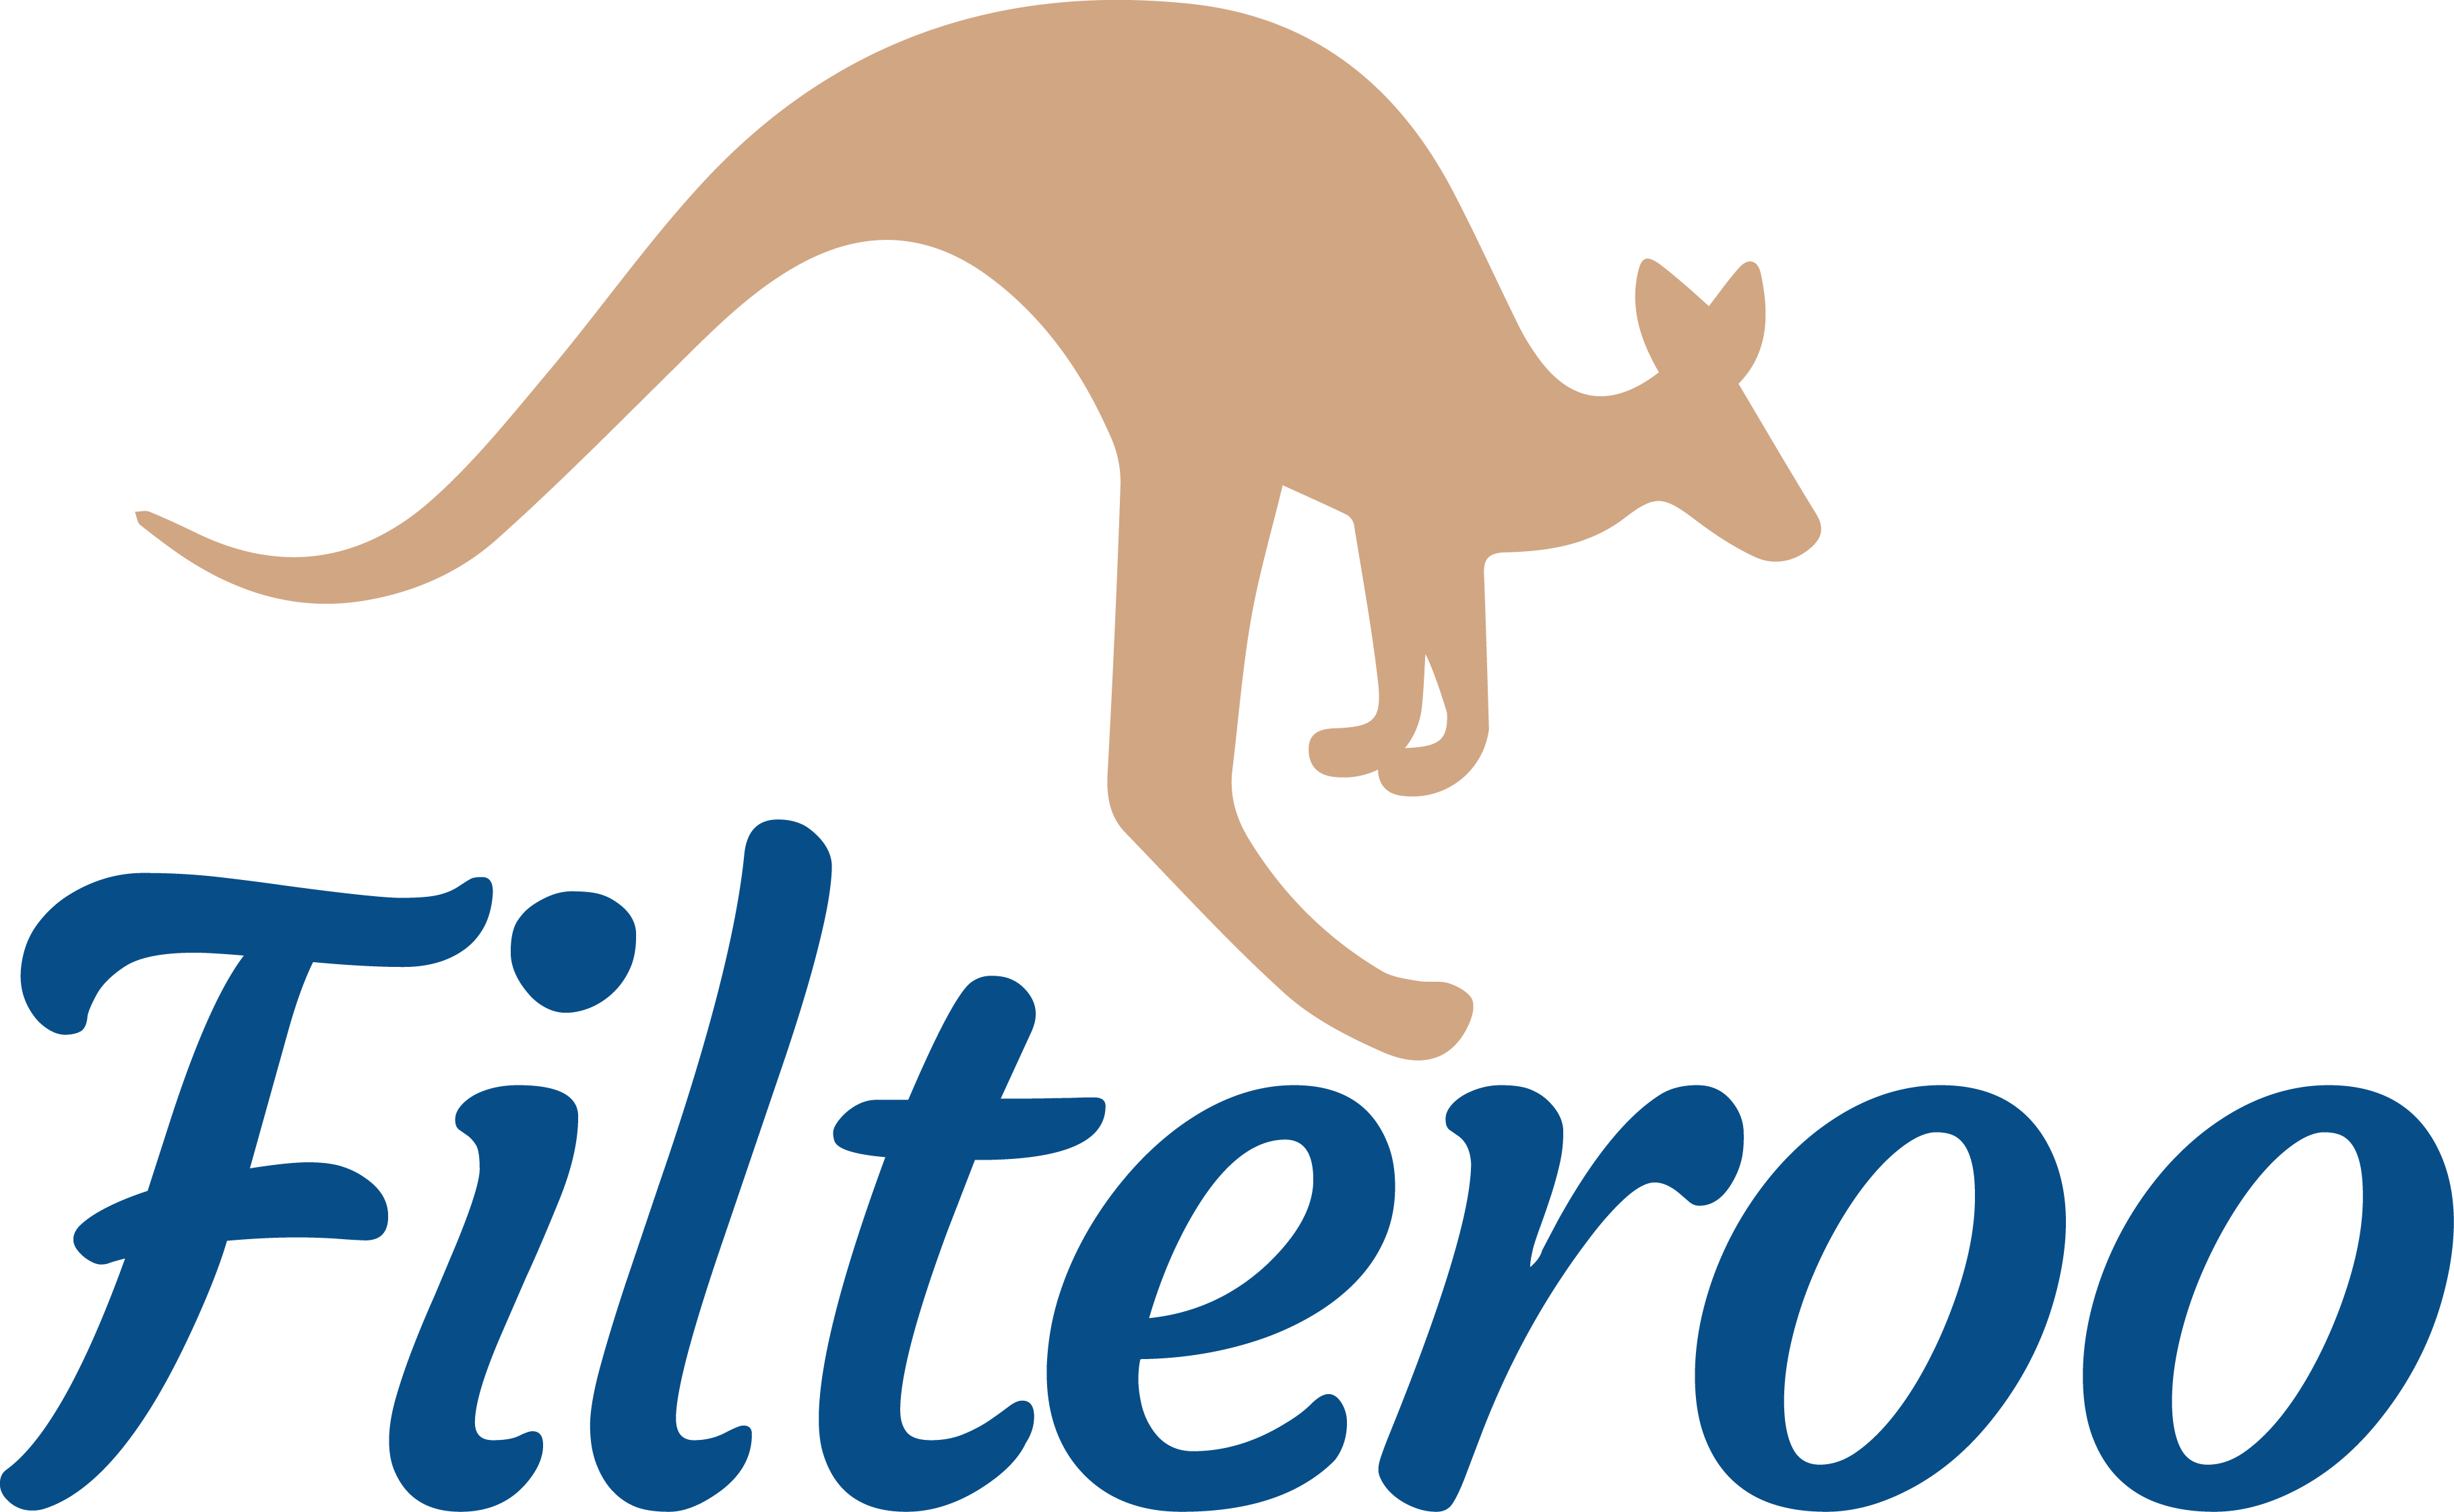 files/Filteroo_Logo.png